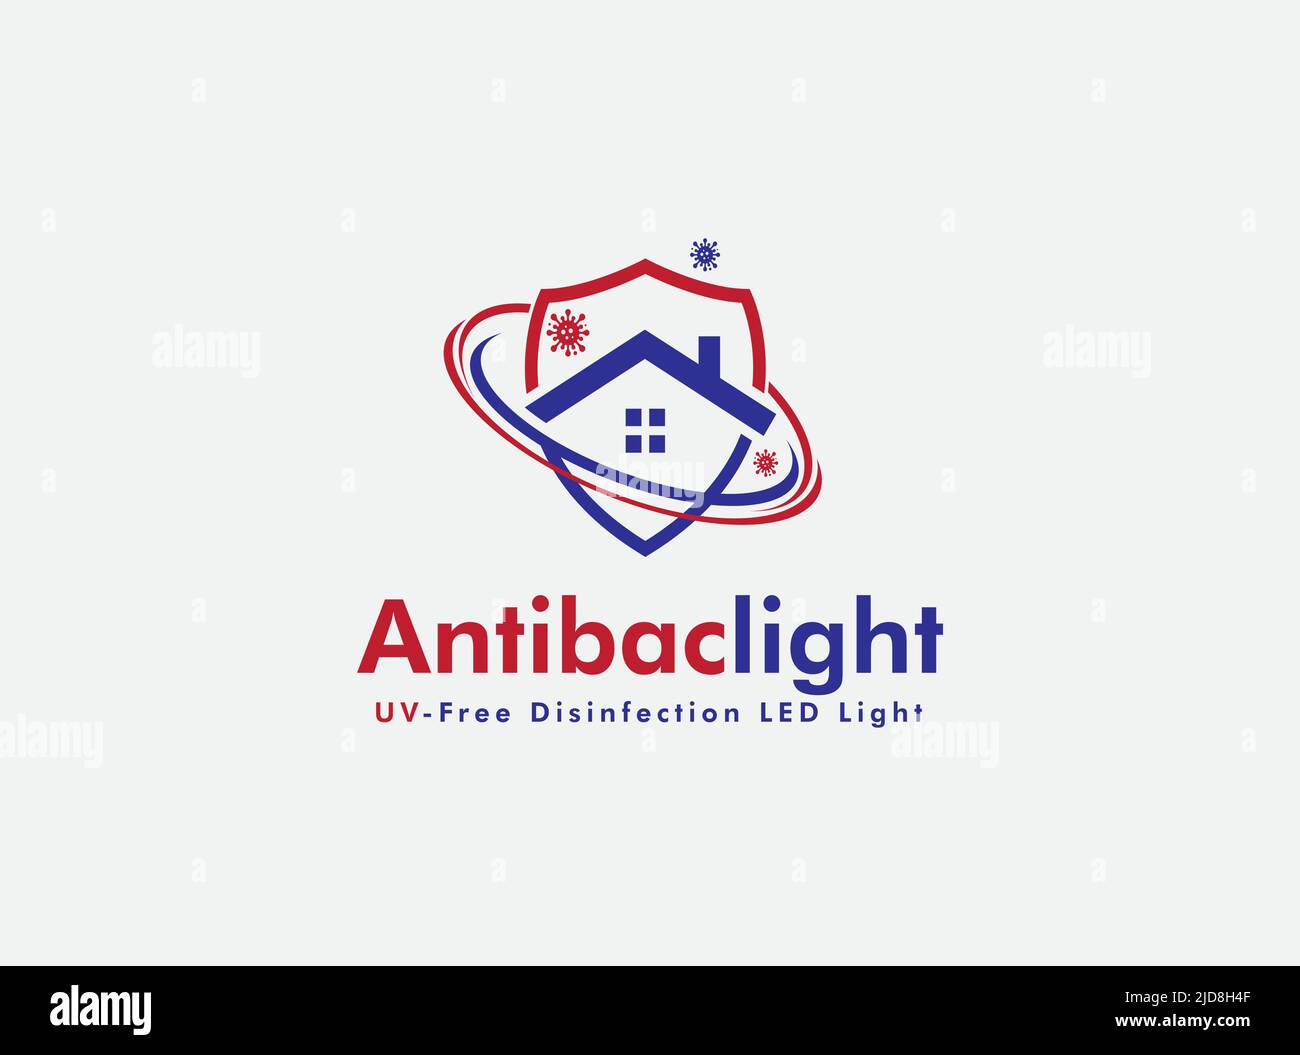 U-V Antibacterial Light For Home Protection Logo Stock Vector